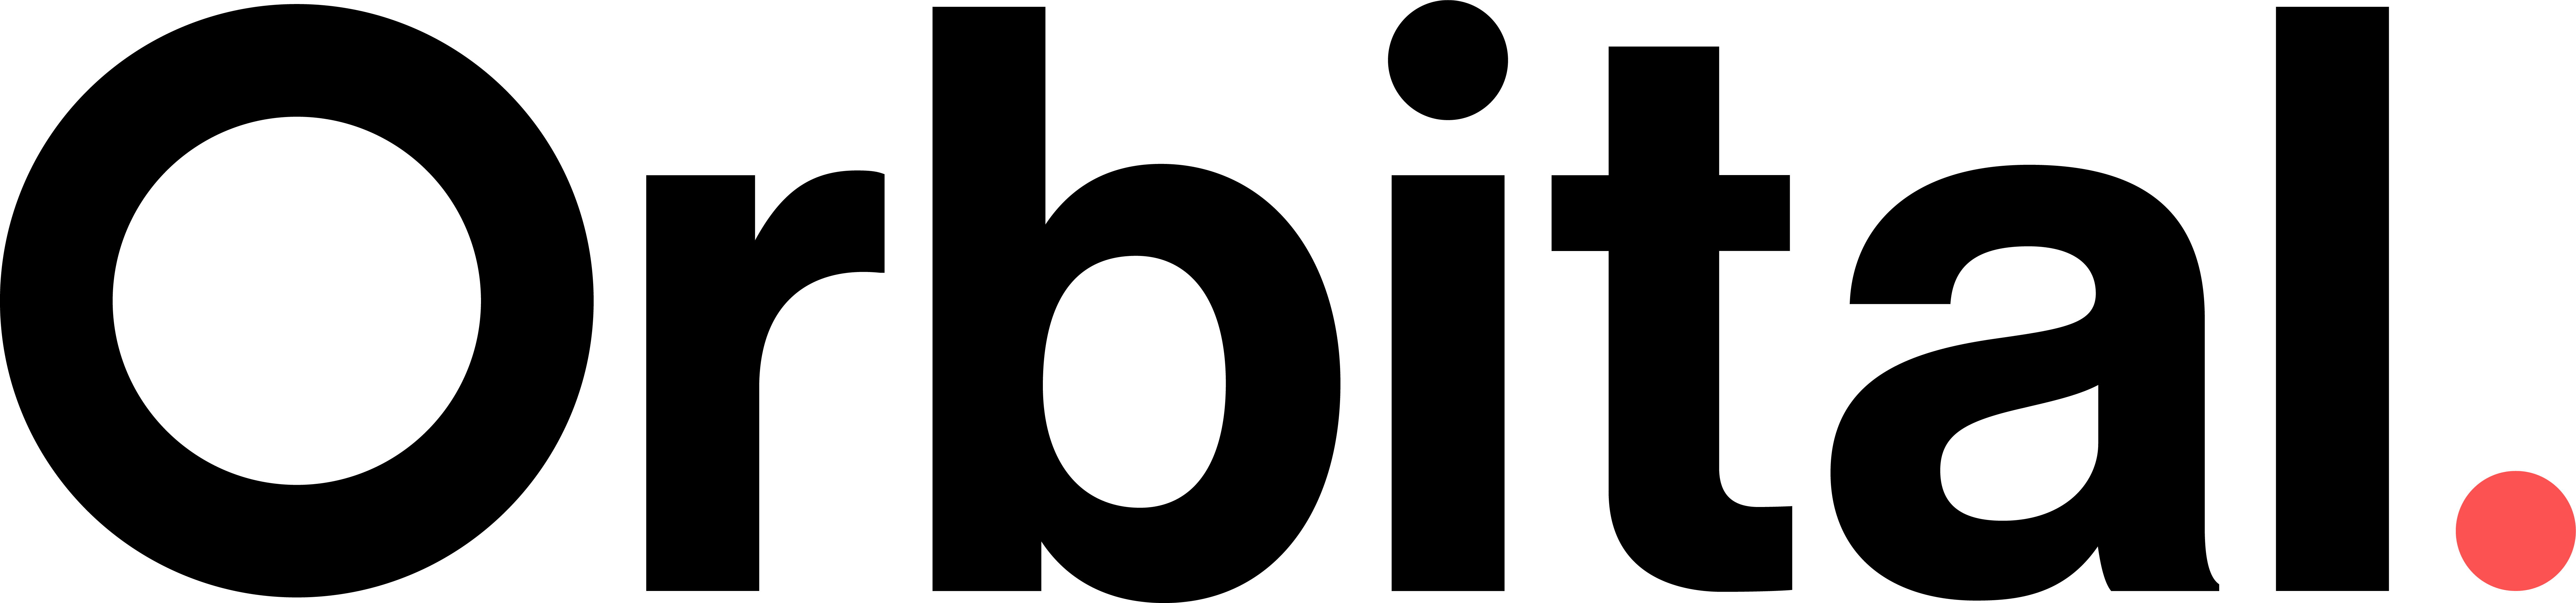 Orbital Logotype Black1